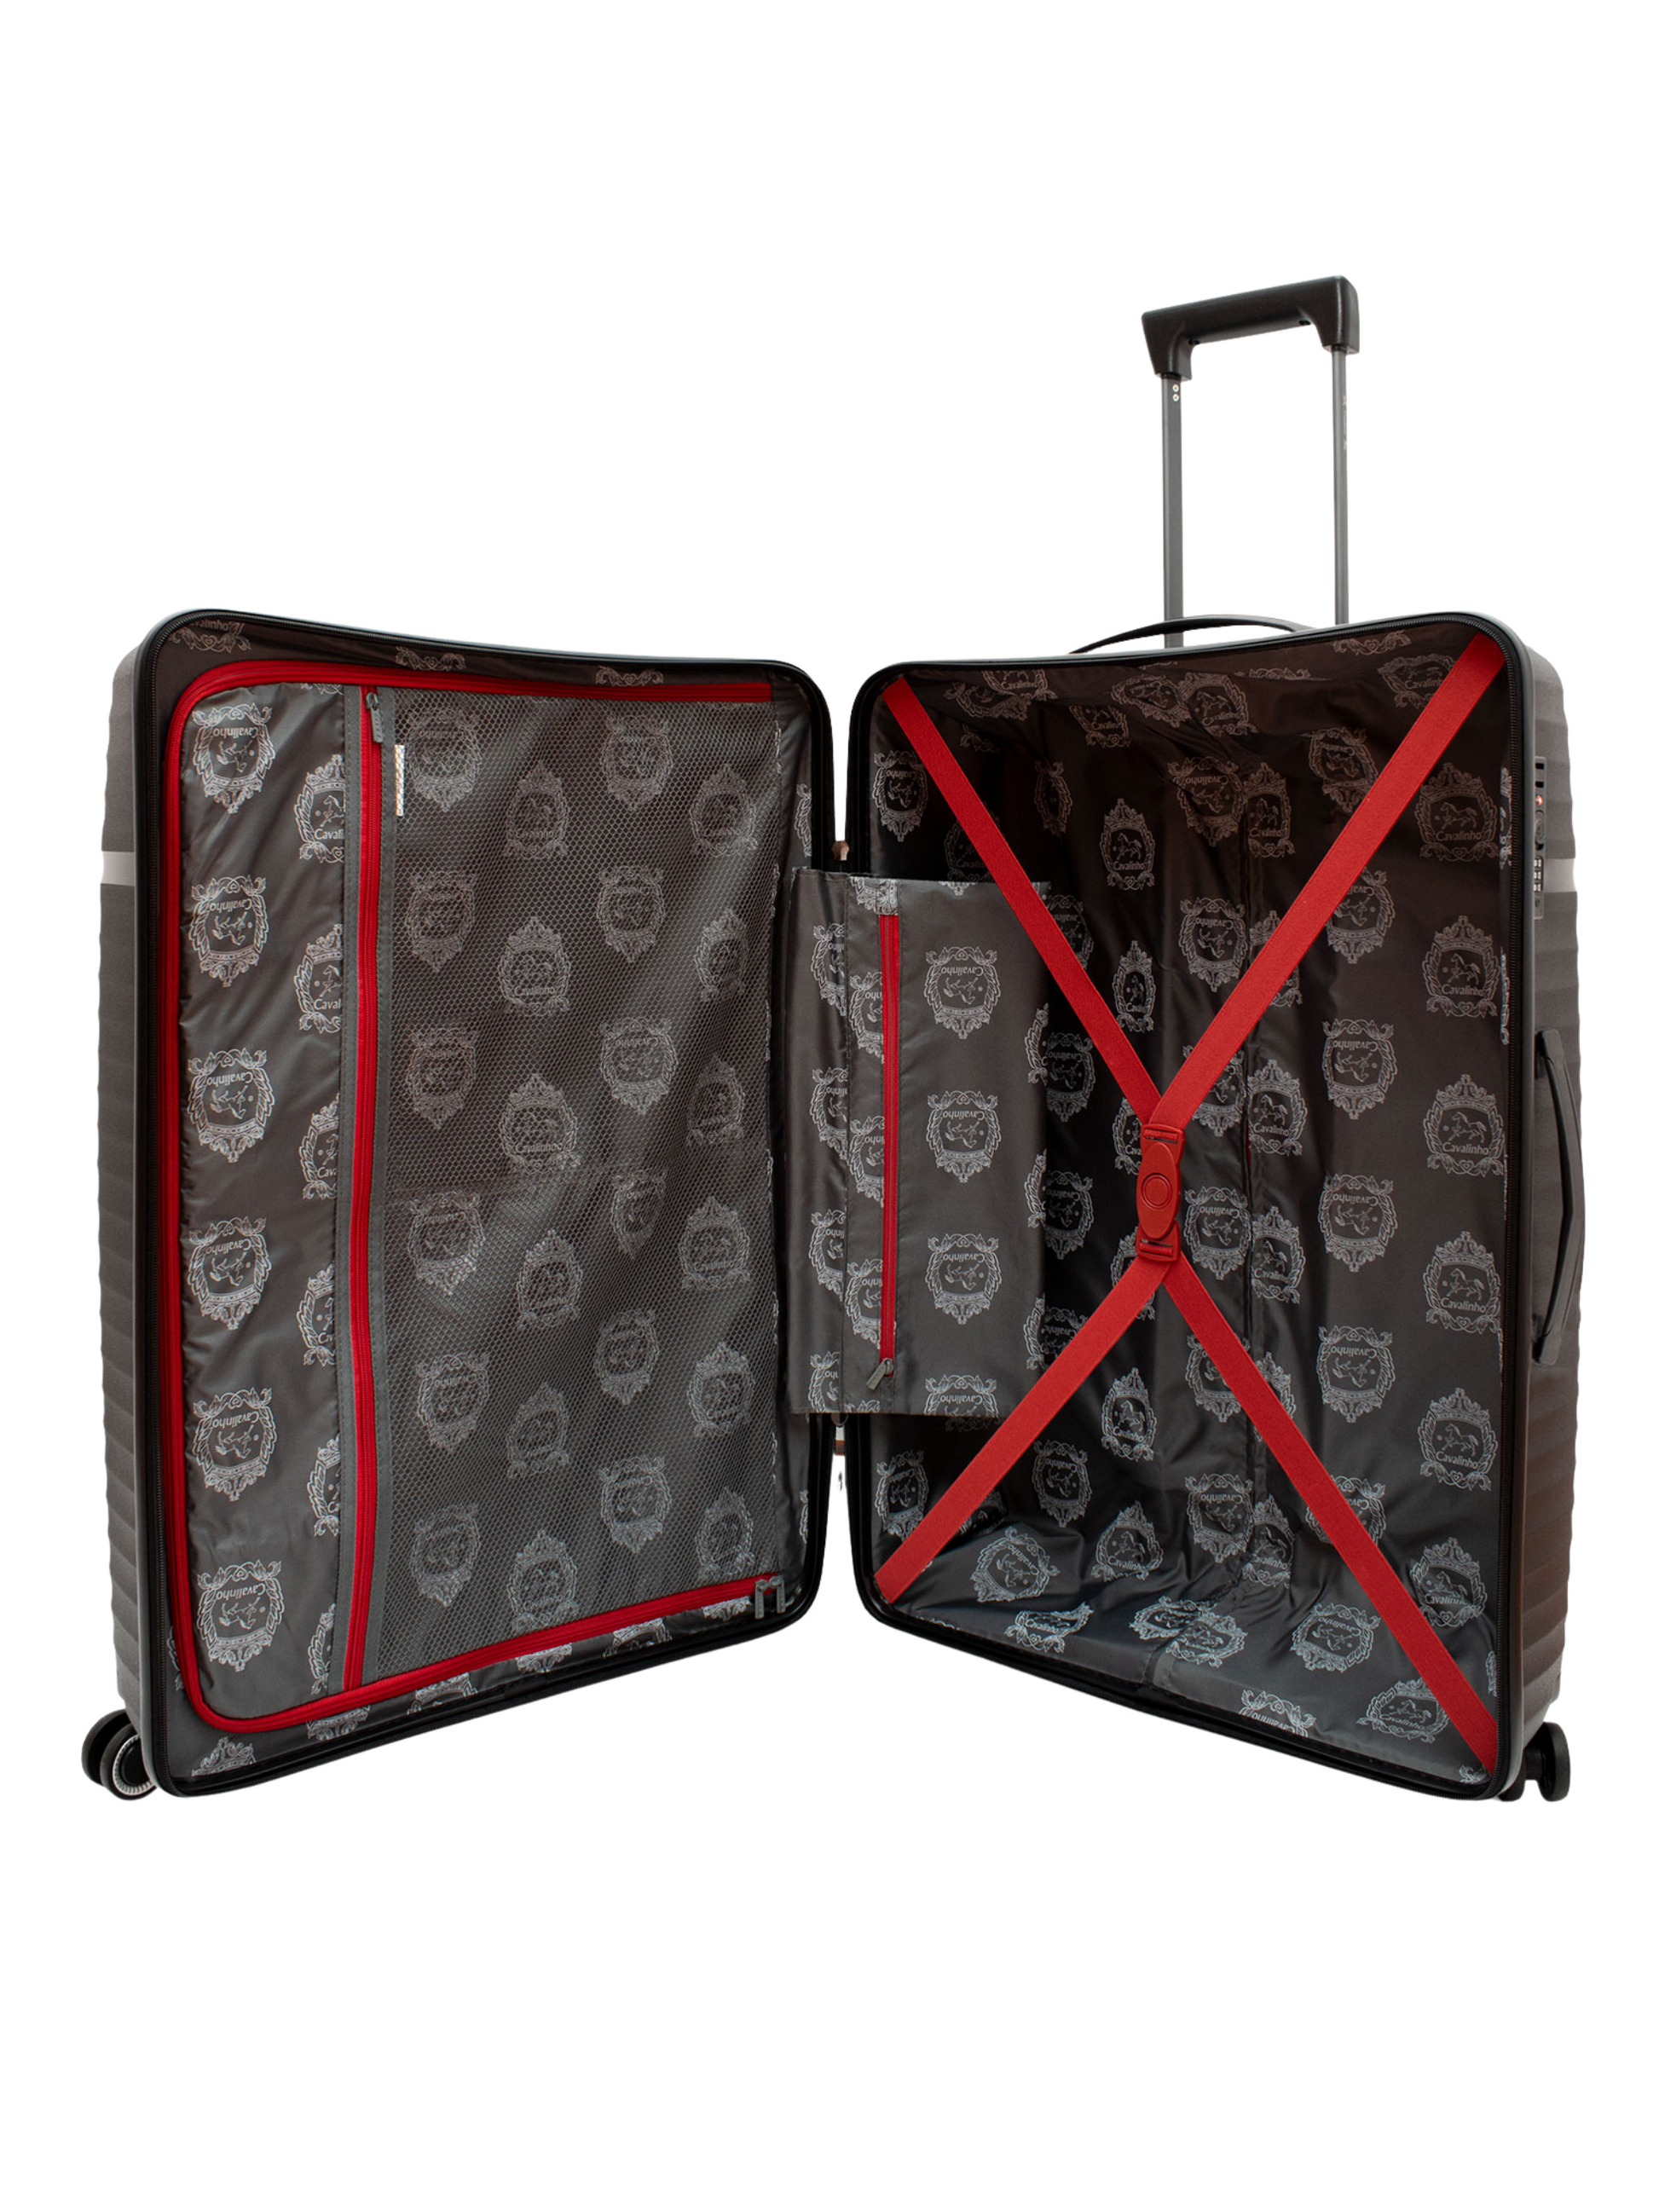 Cavalinho Check-in Hardside Luggage (24" or 28") - 28 inch Black - 68010003.01.28_4